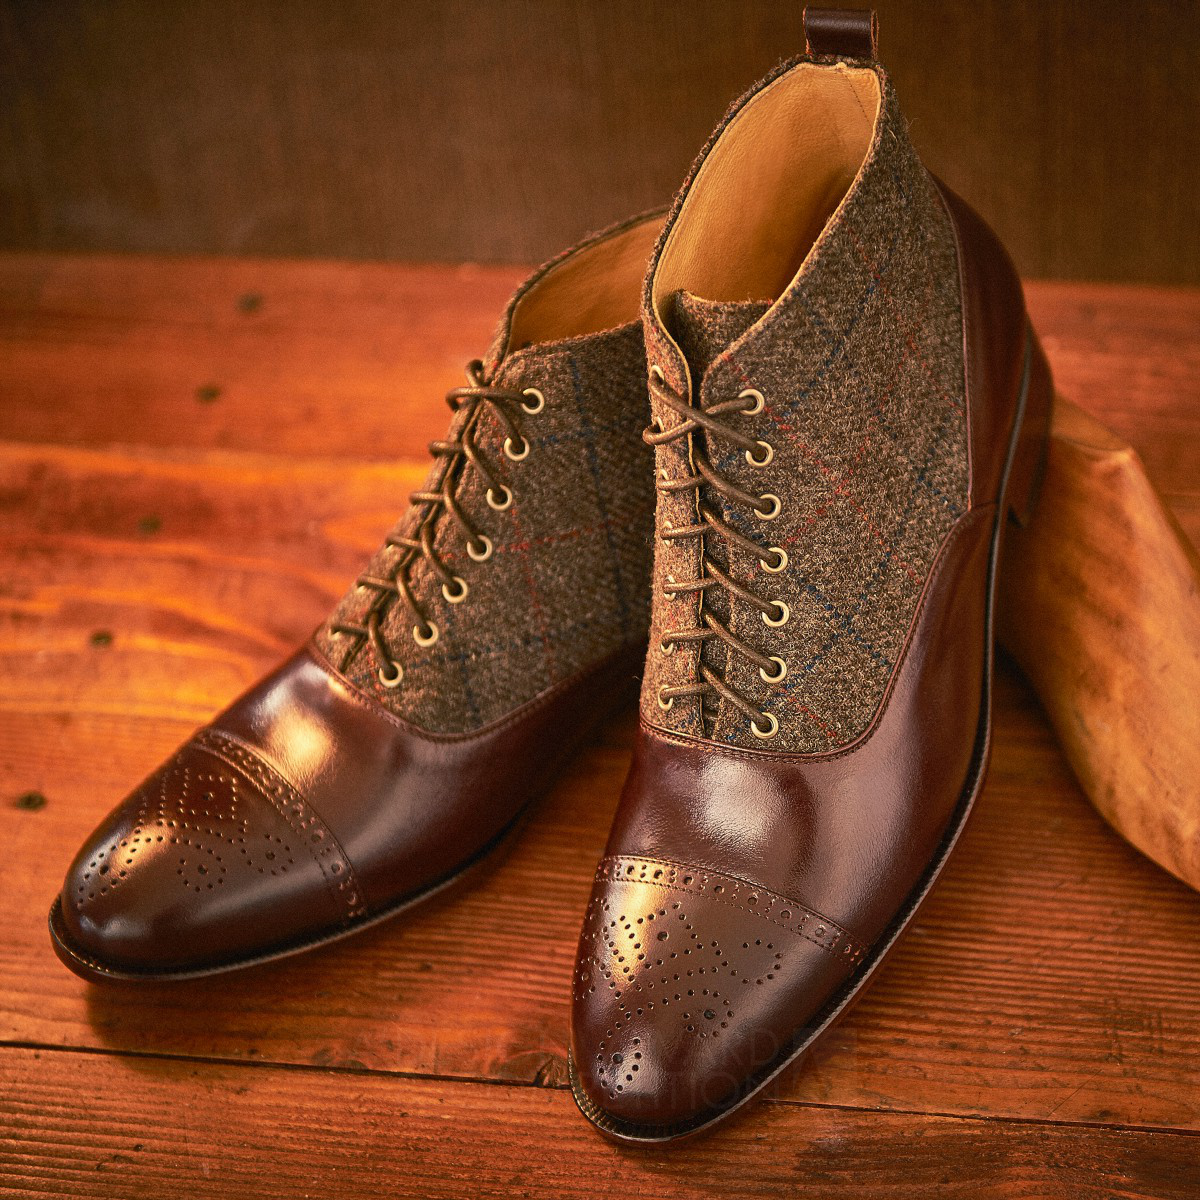 Balmoral <b>Functional and Fashionable Boots